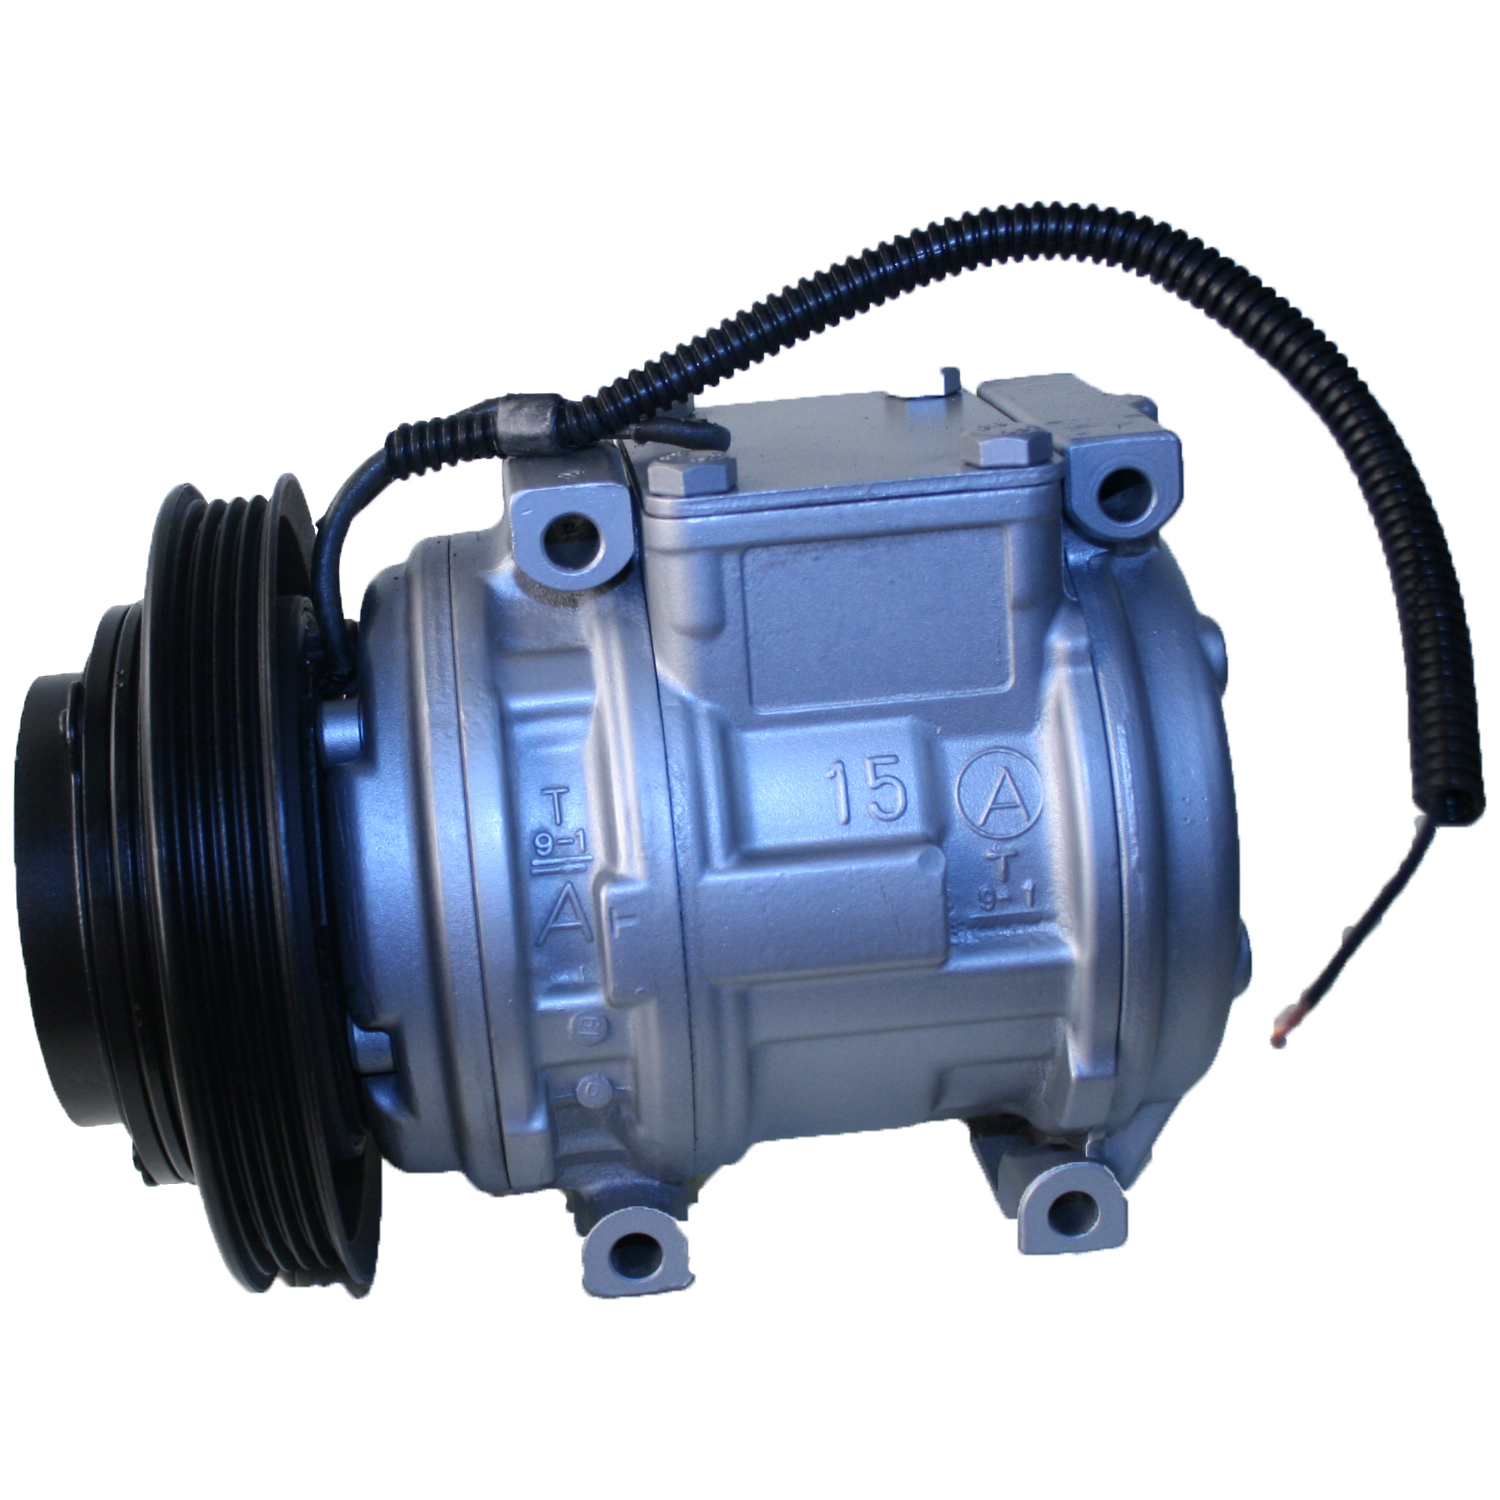 TCW Compressor 31210.402 Remanufactured Product Image field_60b6a13a6e67c